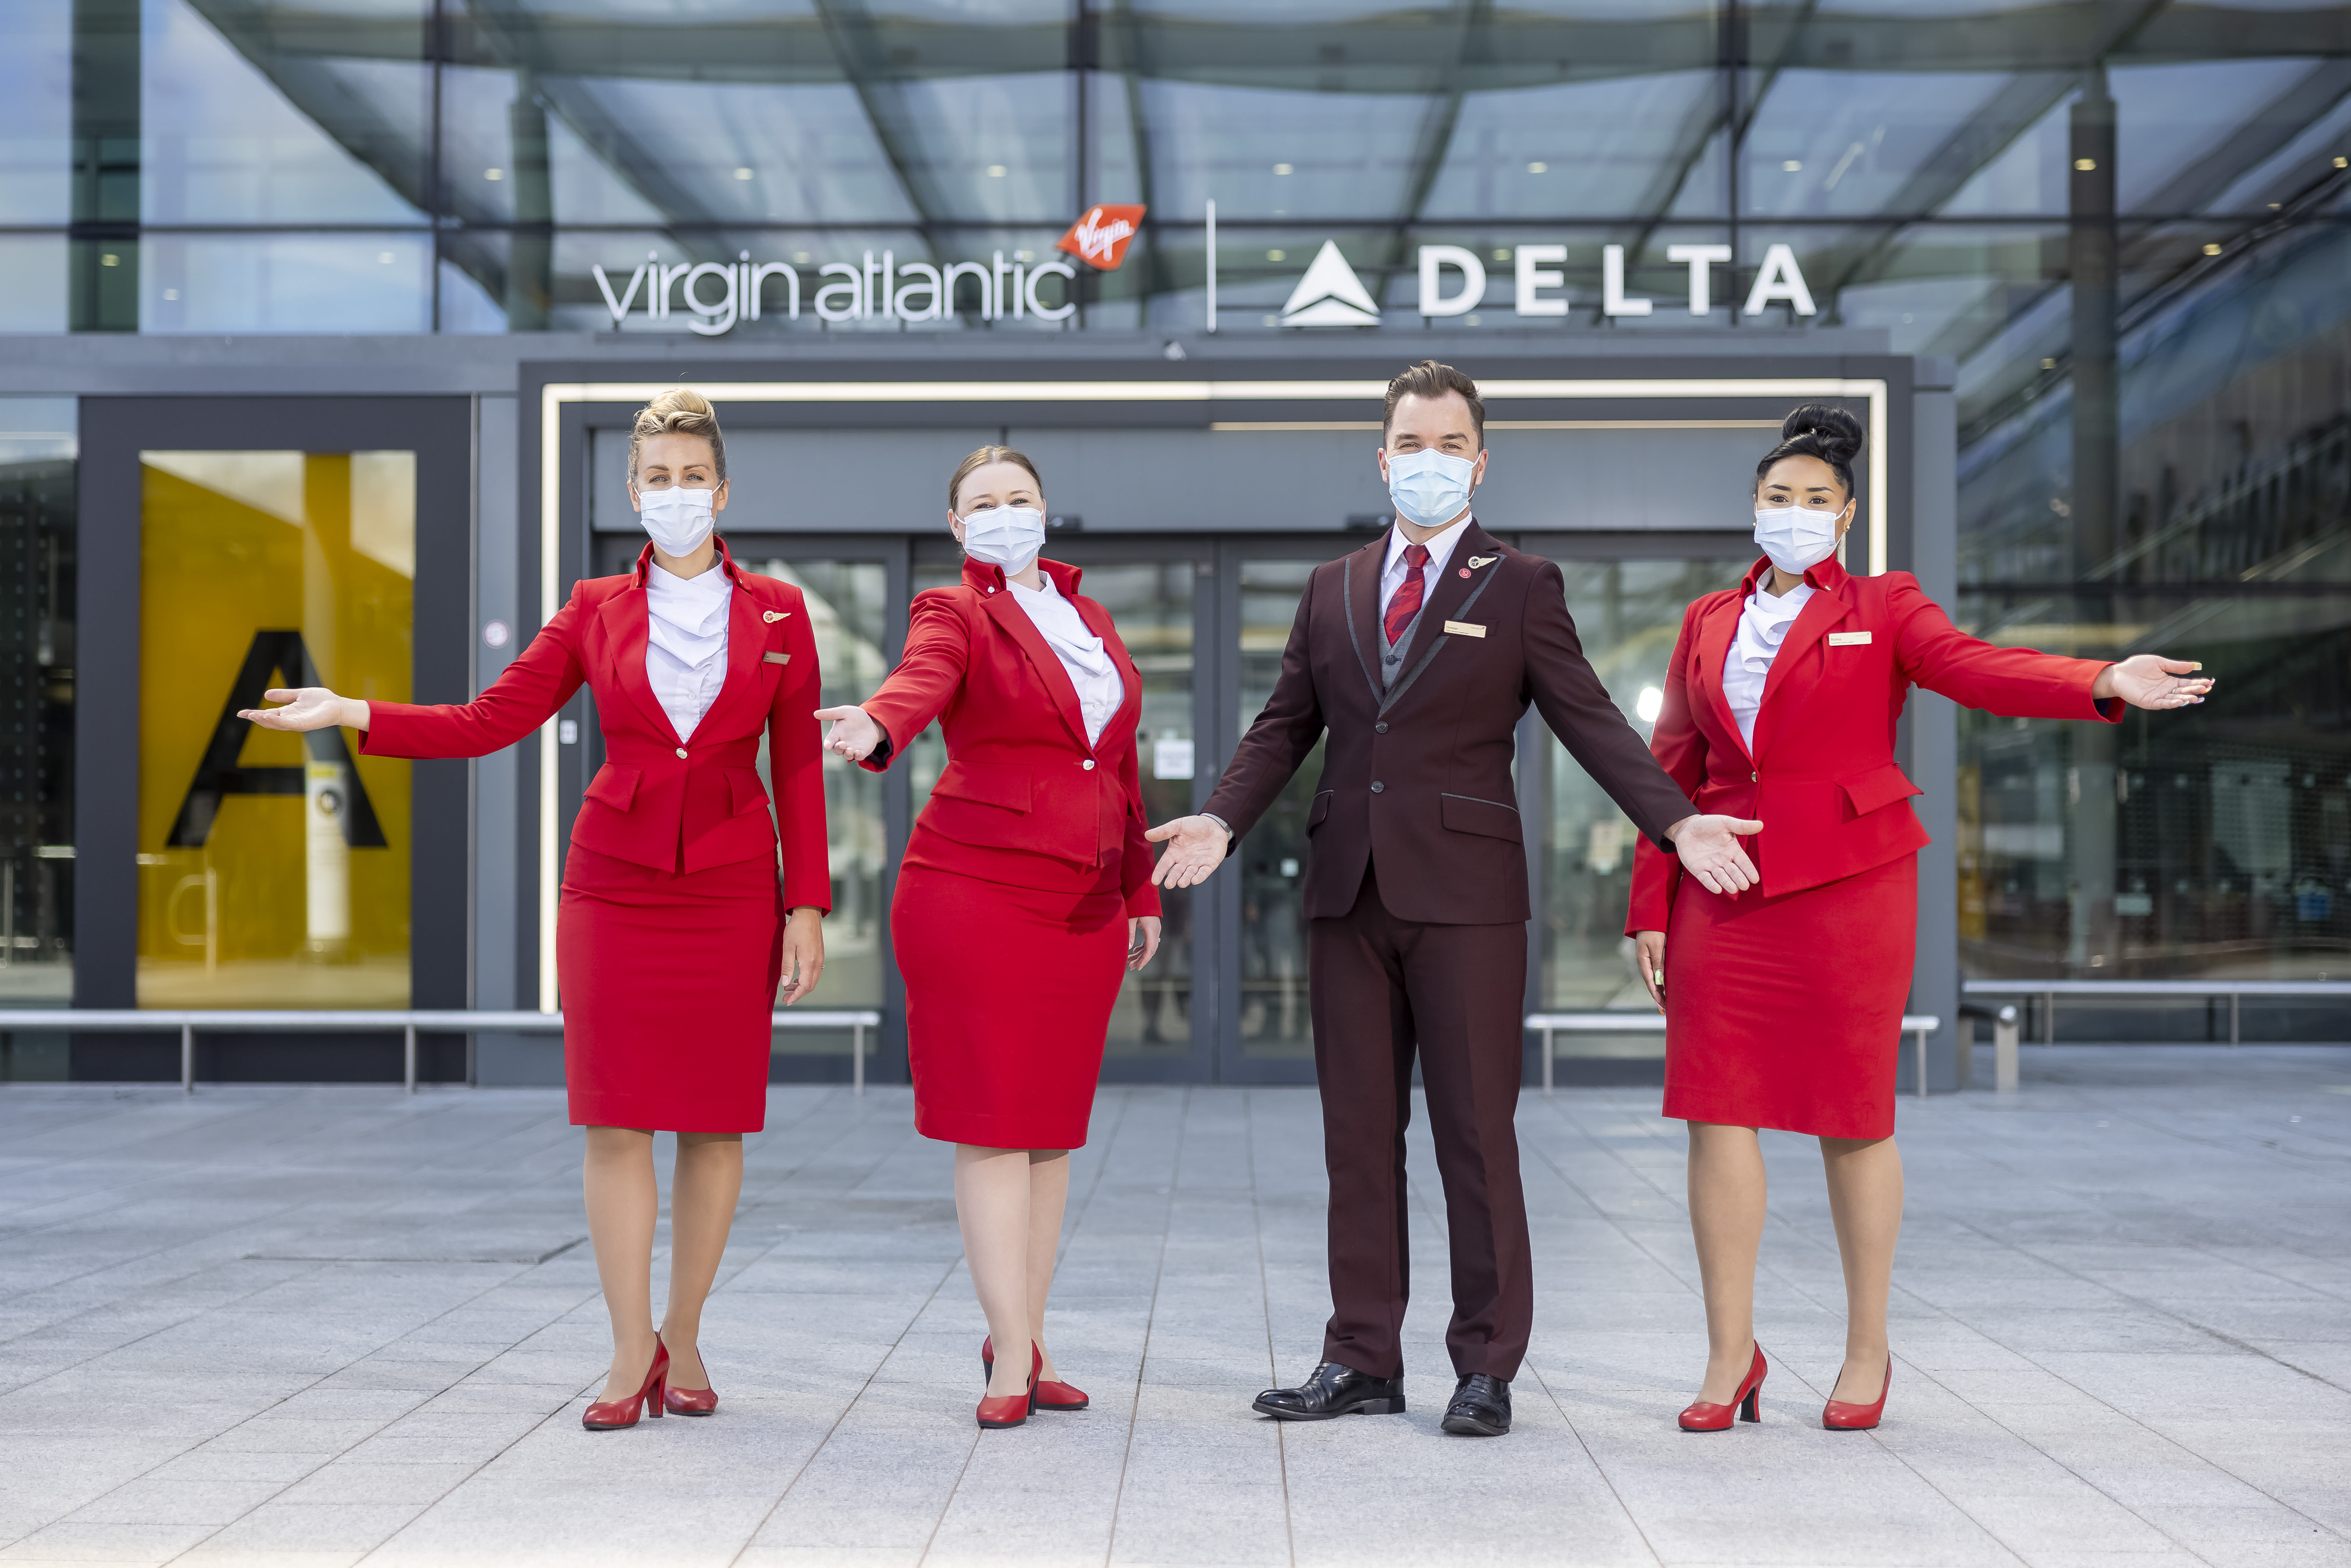 Virgin Atlantic cabin crew stand outside Virgin Atlantic and Delta Air Lines' entrance to London Heathrow Terminal 3